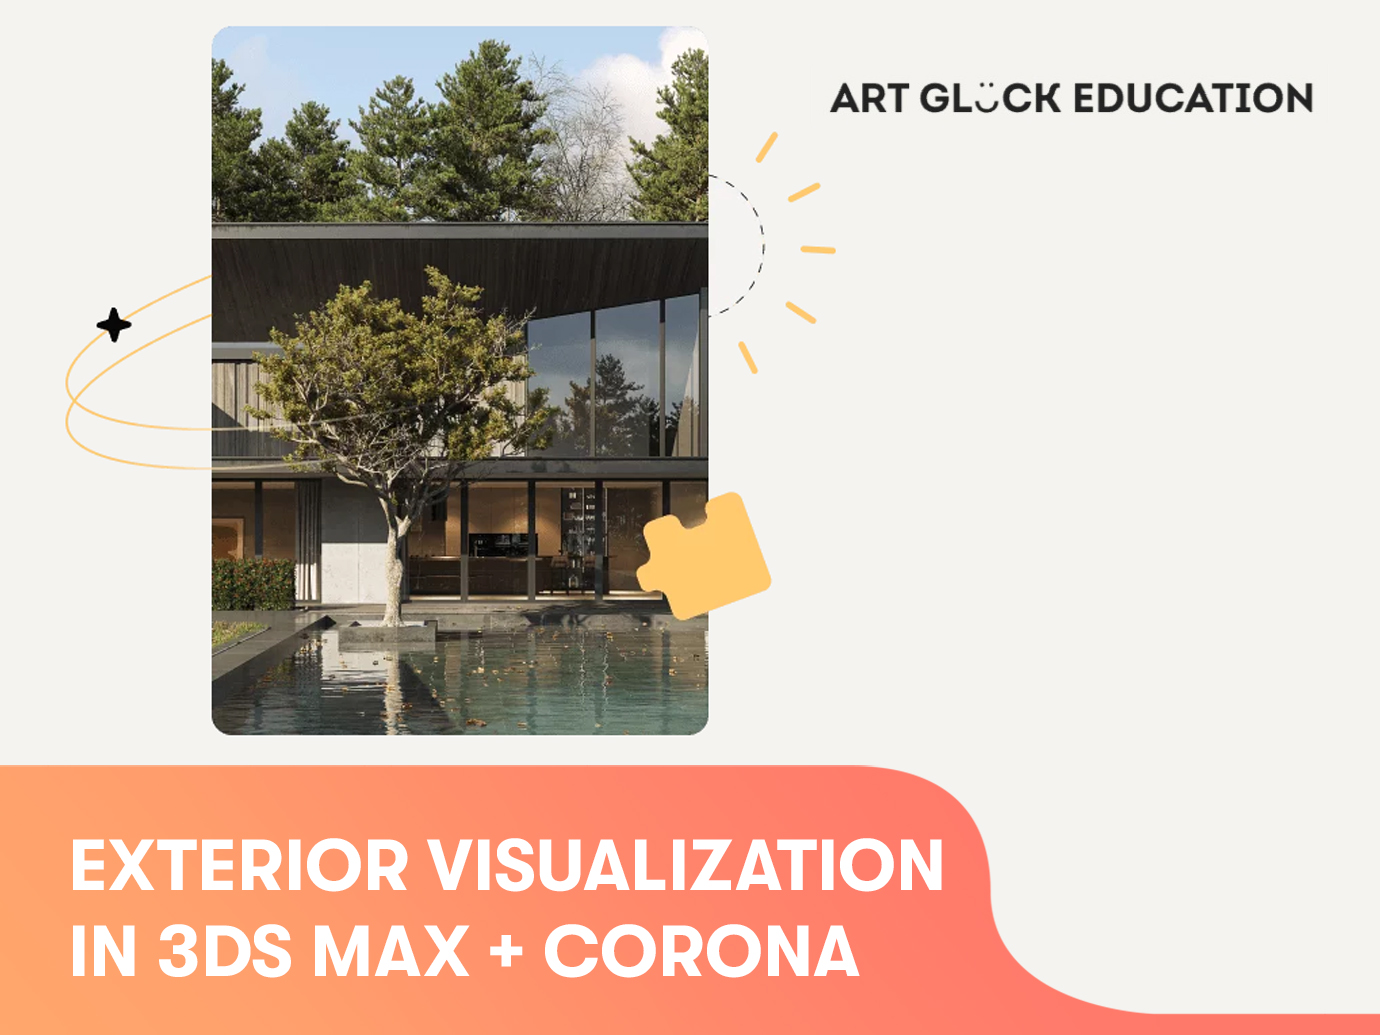 EXTERIOR VISUALIZATION IN 3DS MAX + CORONA